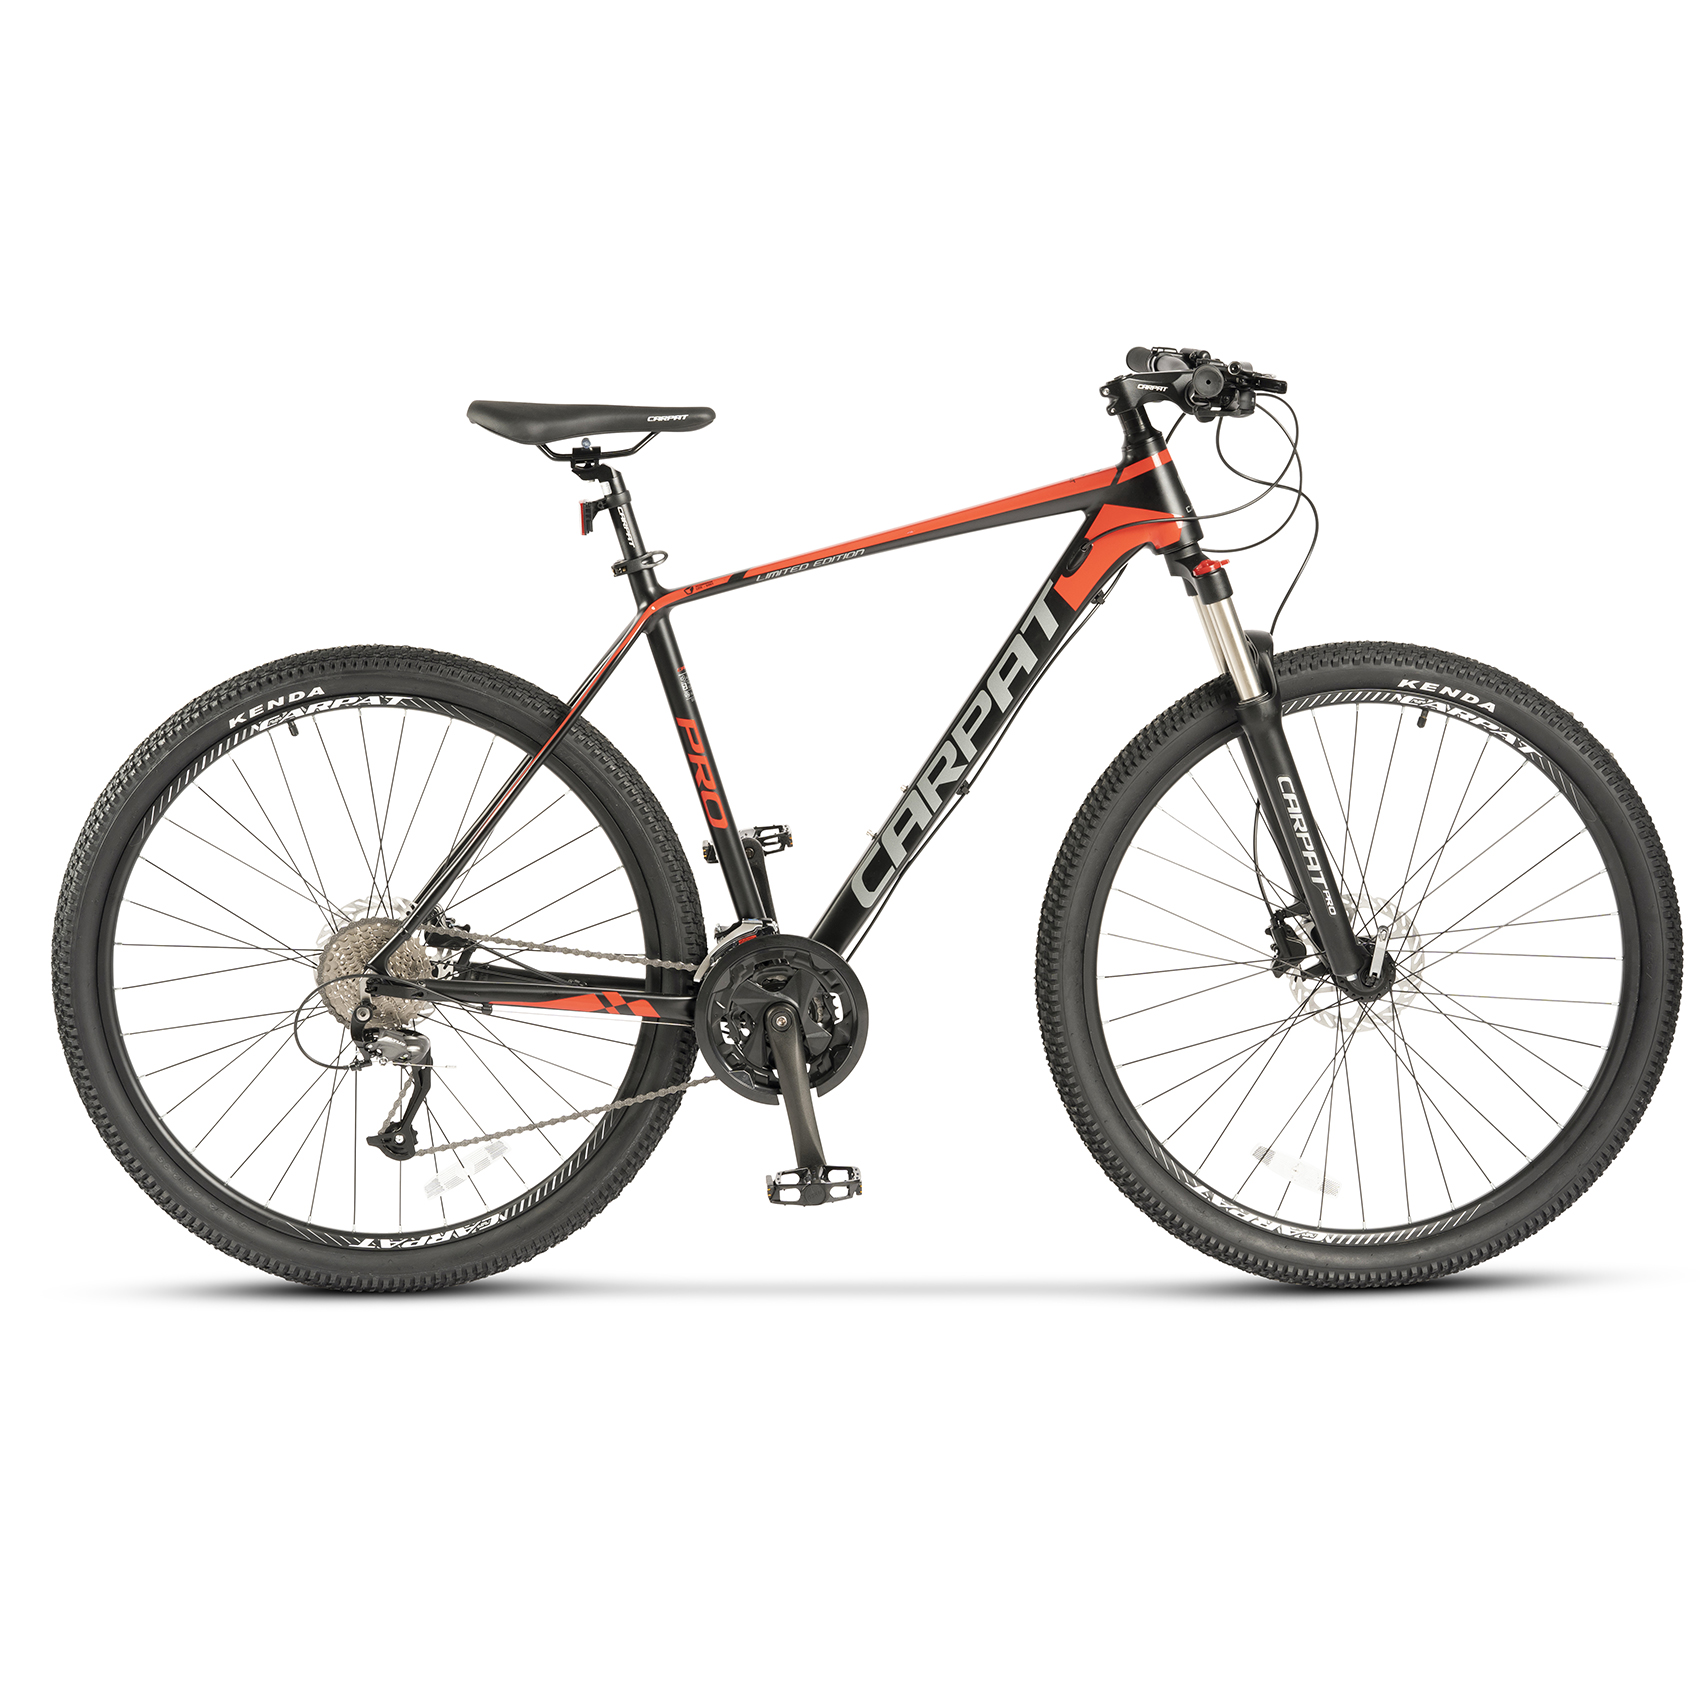 PROMO BICICLETE - Bicicleta MTB-HT Carpat PRO C26227H LIMITED EDITION 26", Negru/Rosu, https:carpatsport.ro